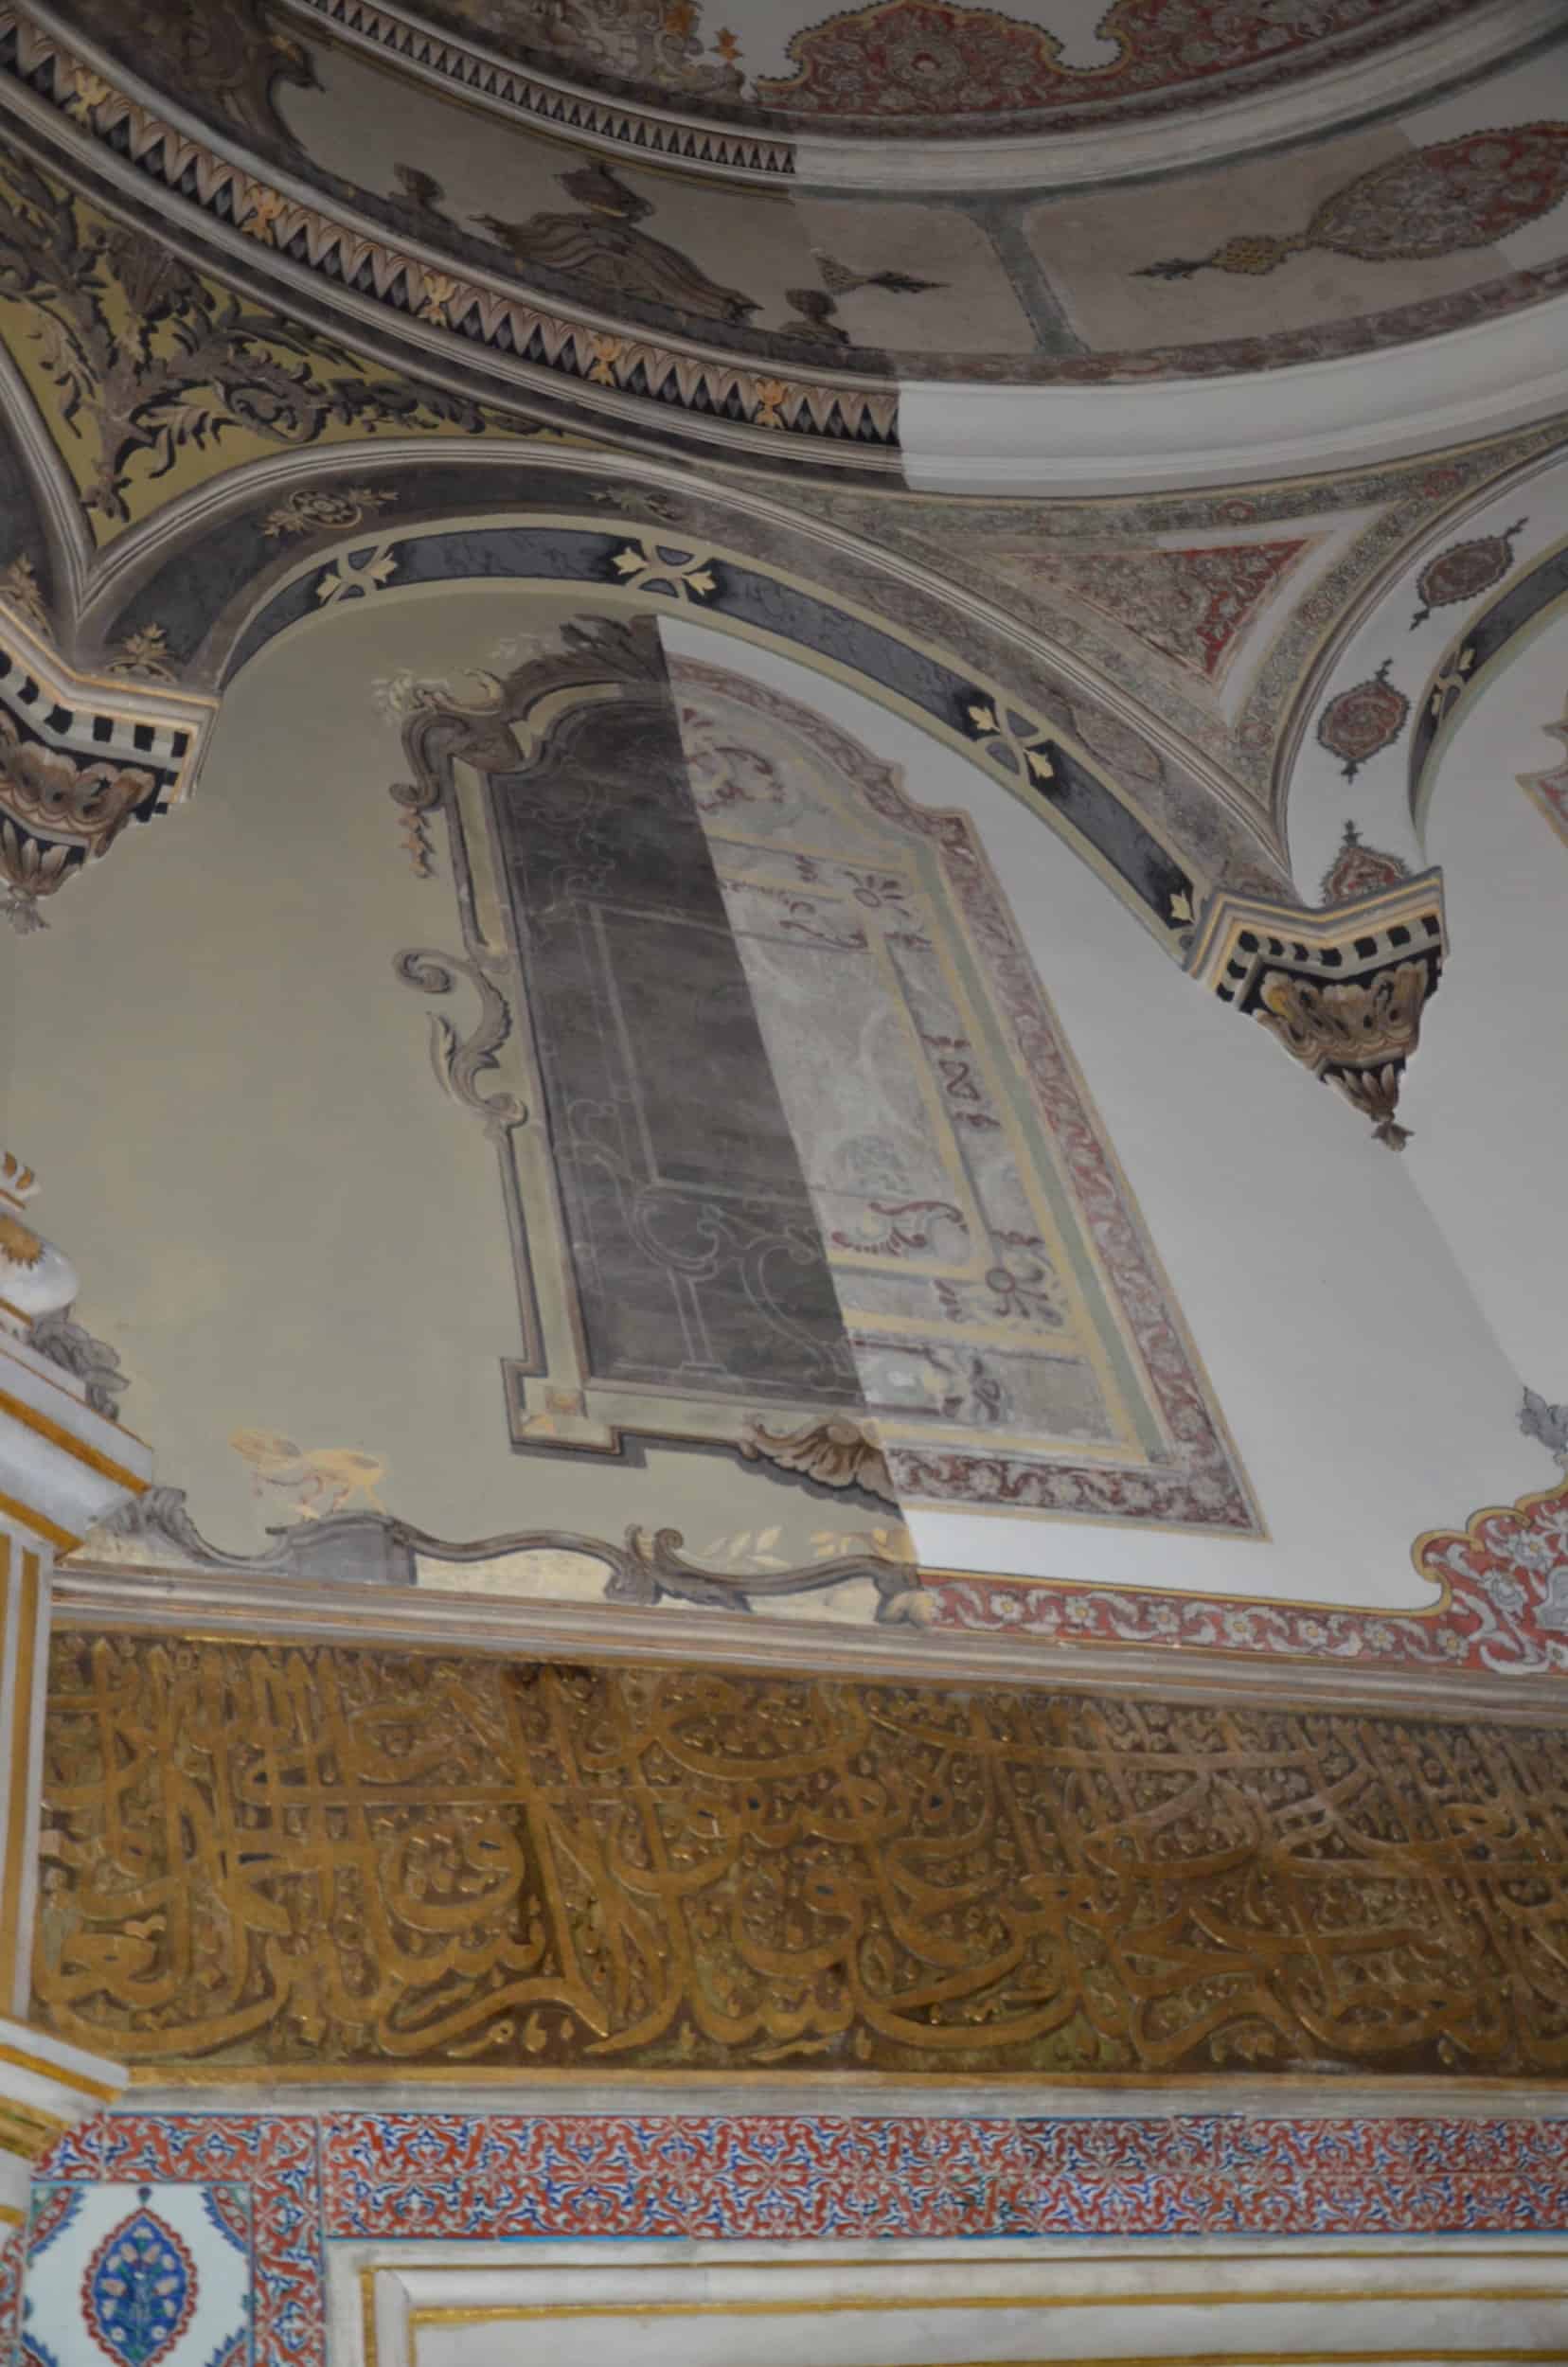 Partially restored artwork in the Tomb of Mustafa III